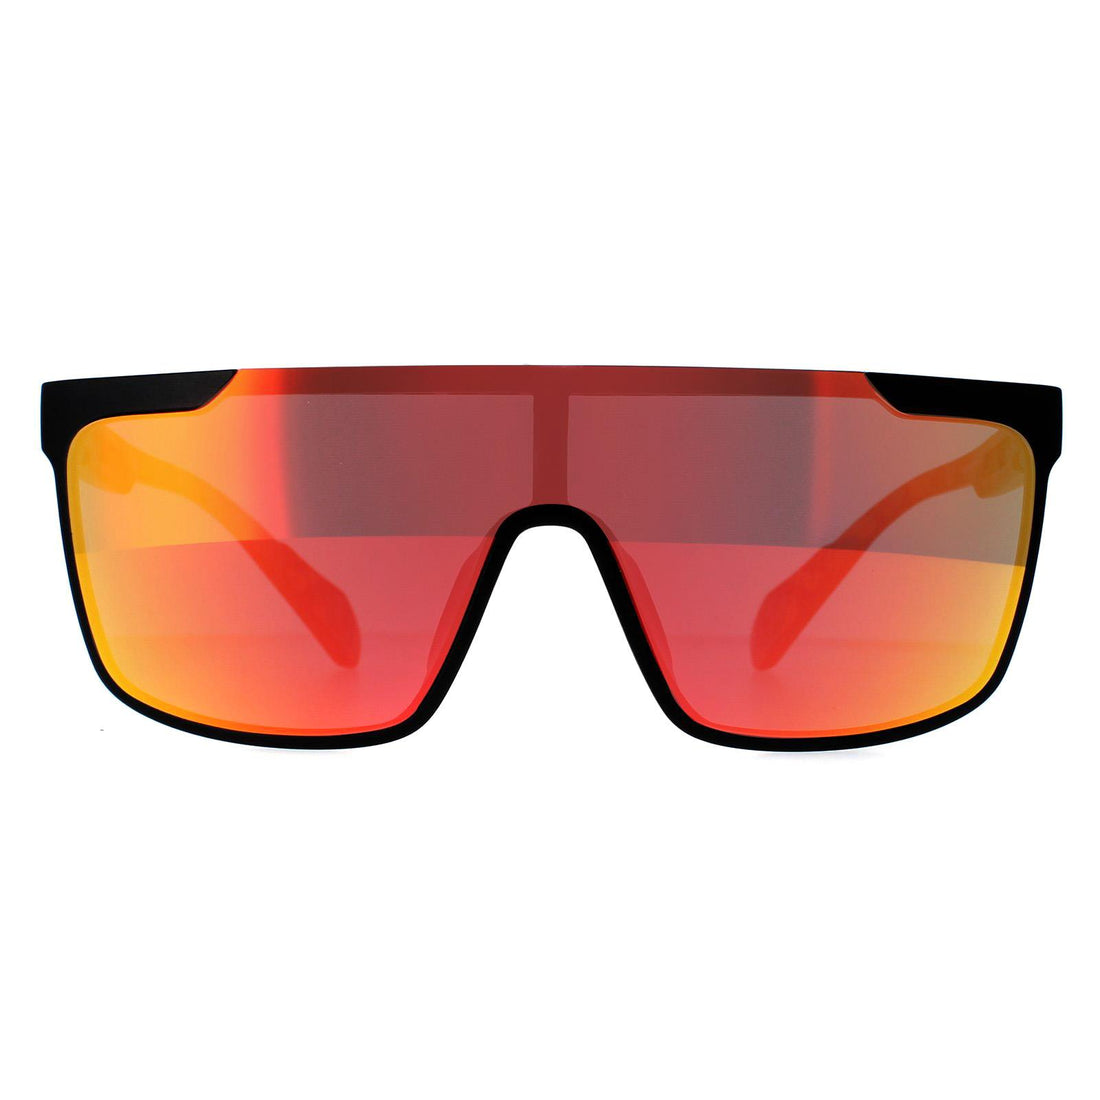 Adidas SP0020 Sunglasses Matte Black Orange Camo / Contrast Mirror Red